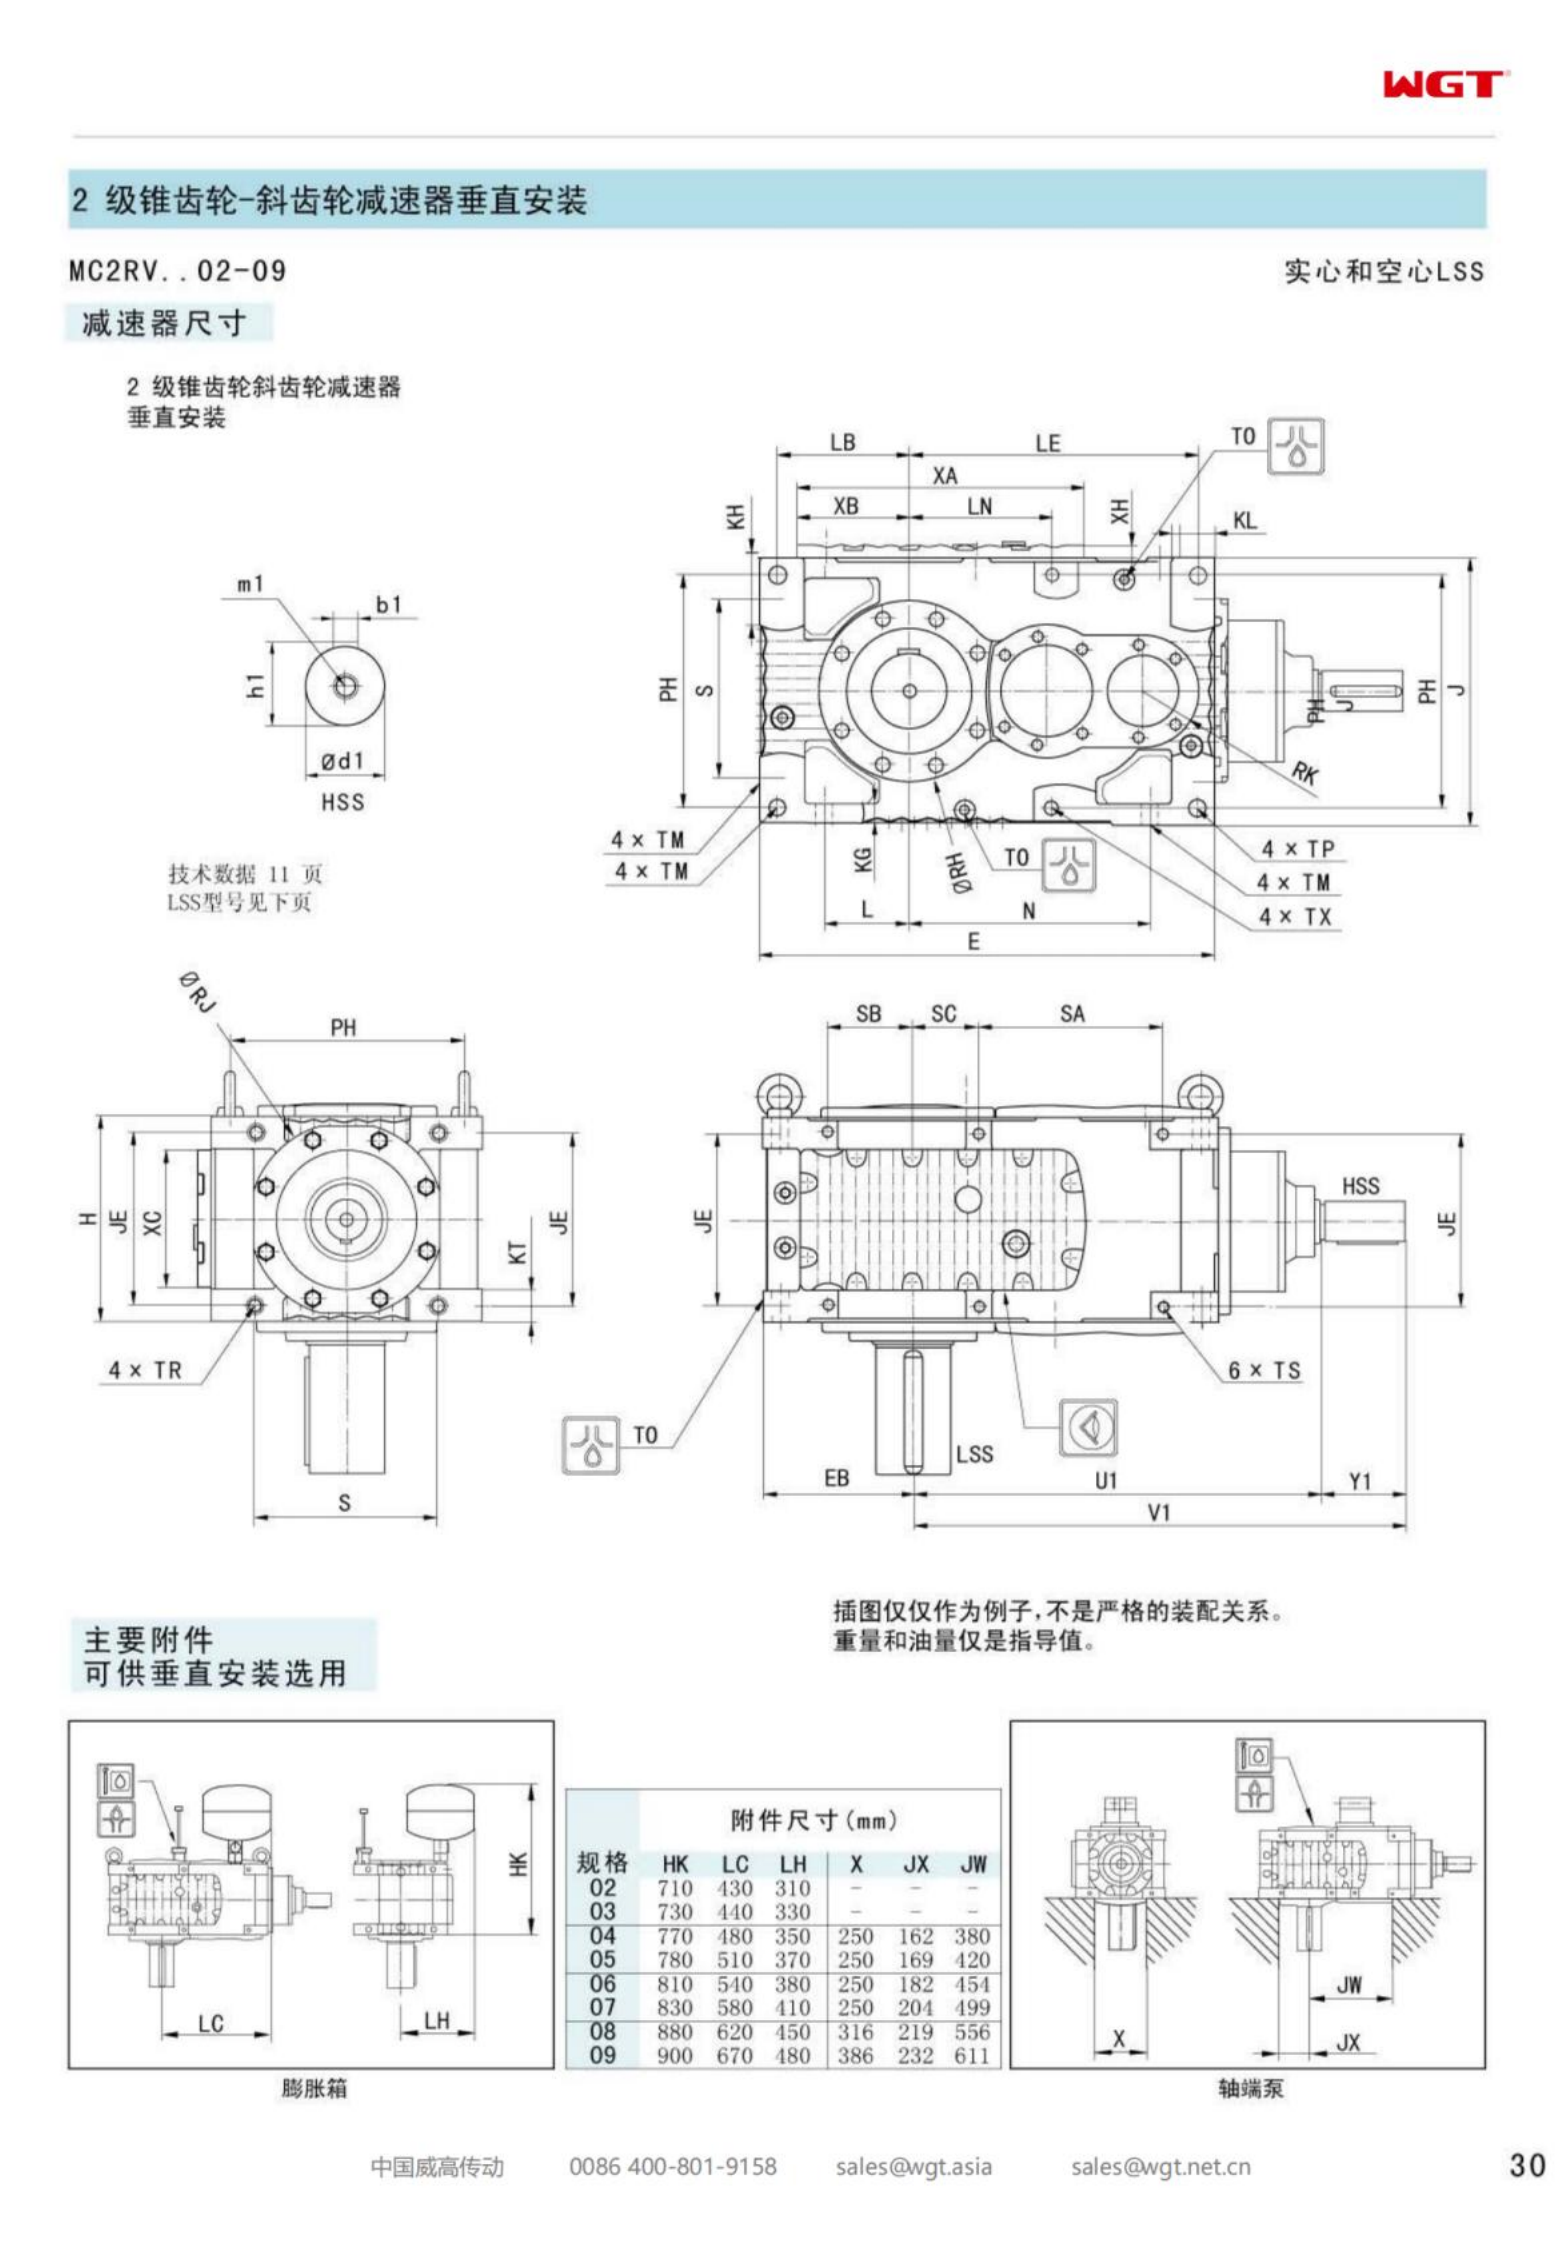 MC2RVHF09 replaces _SEW_MC_Series gearbox (patent)